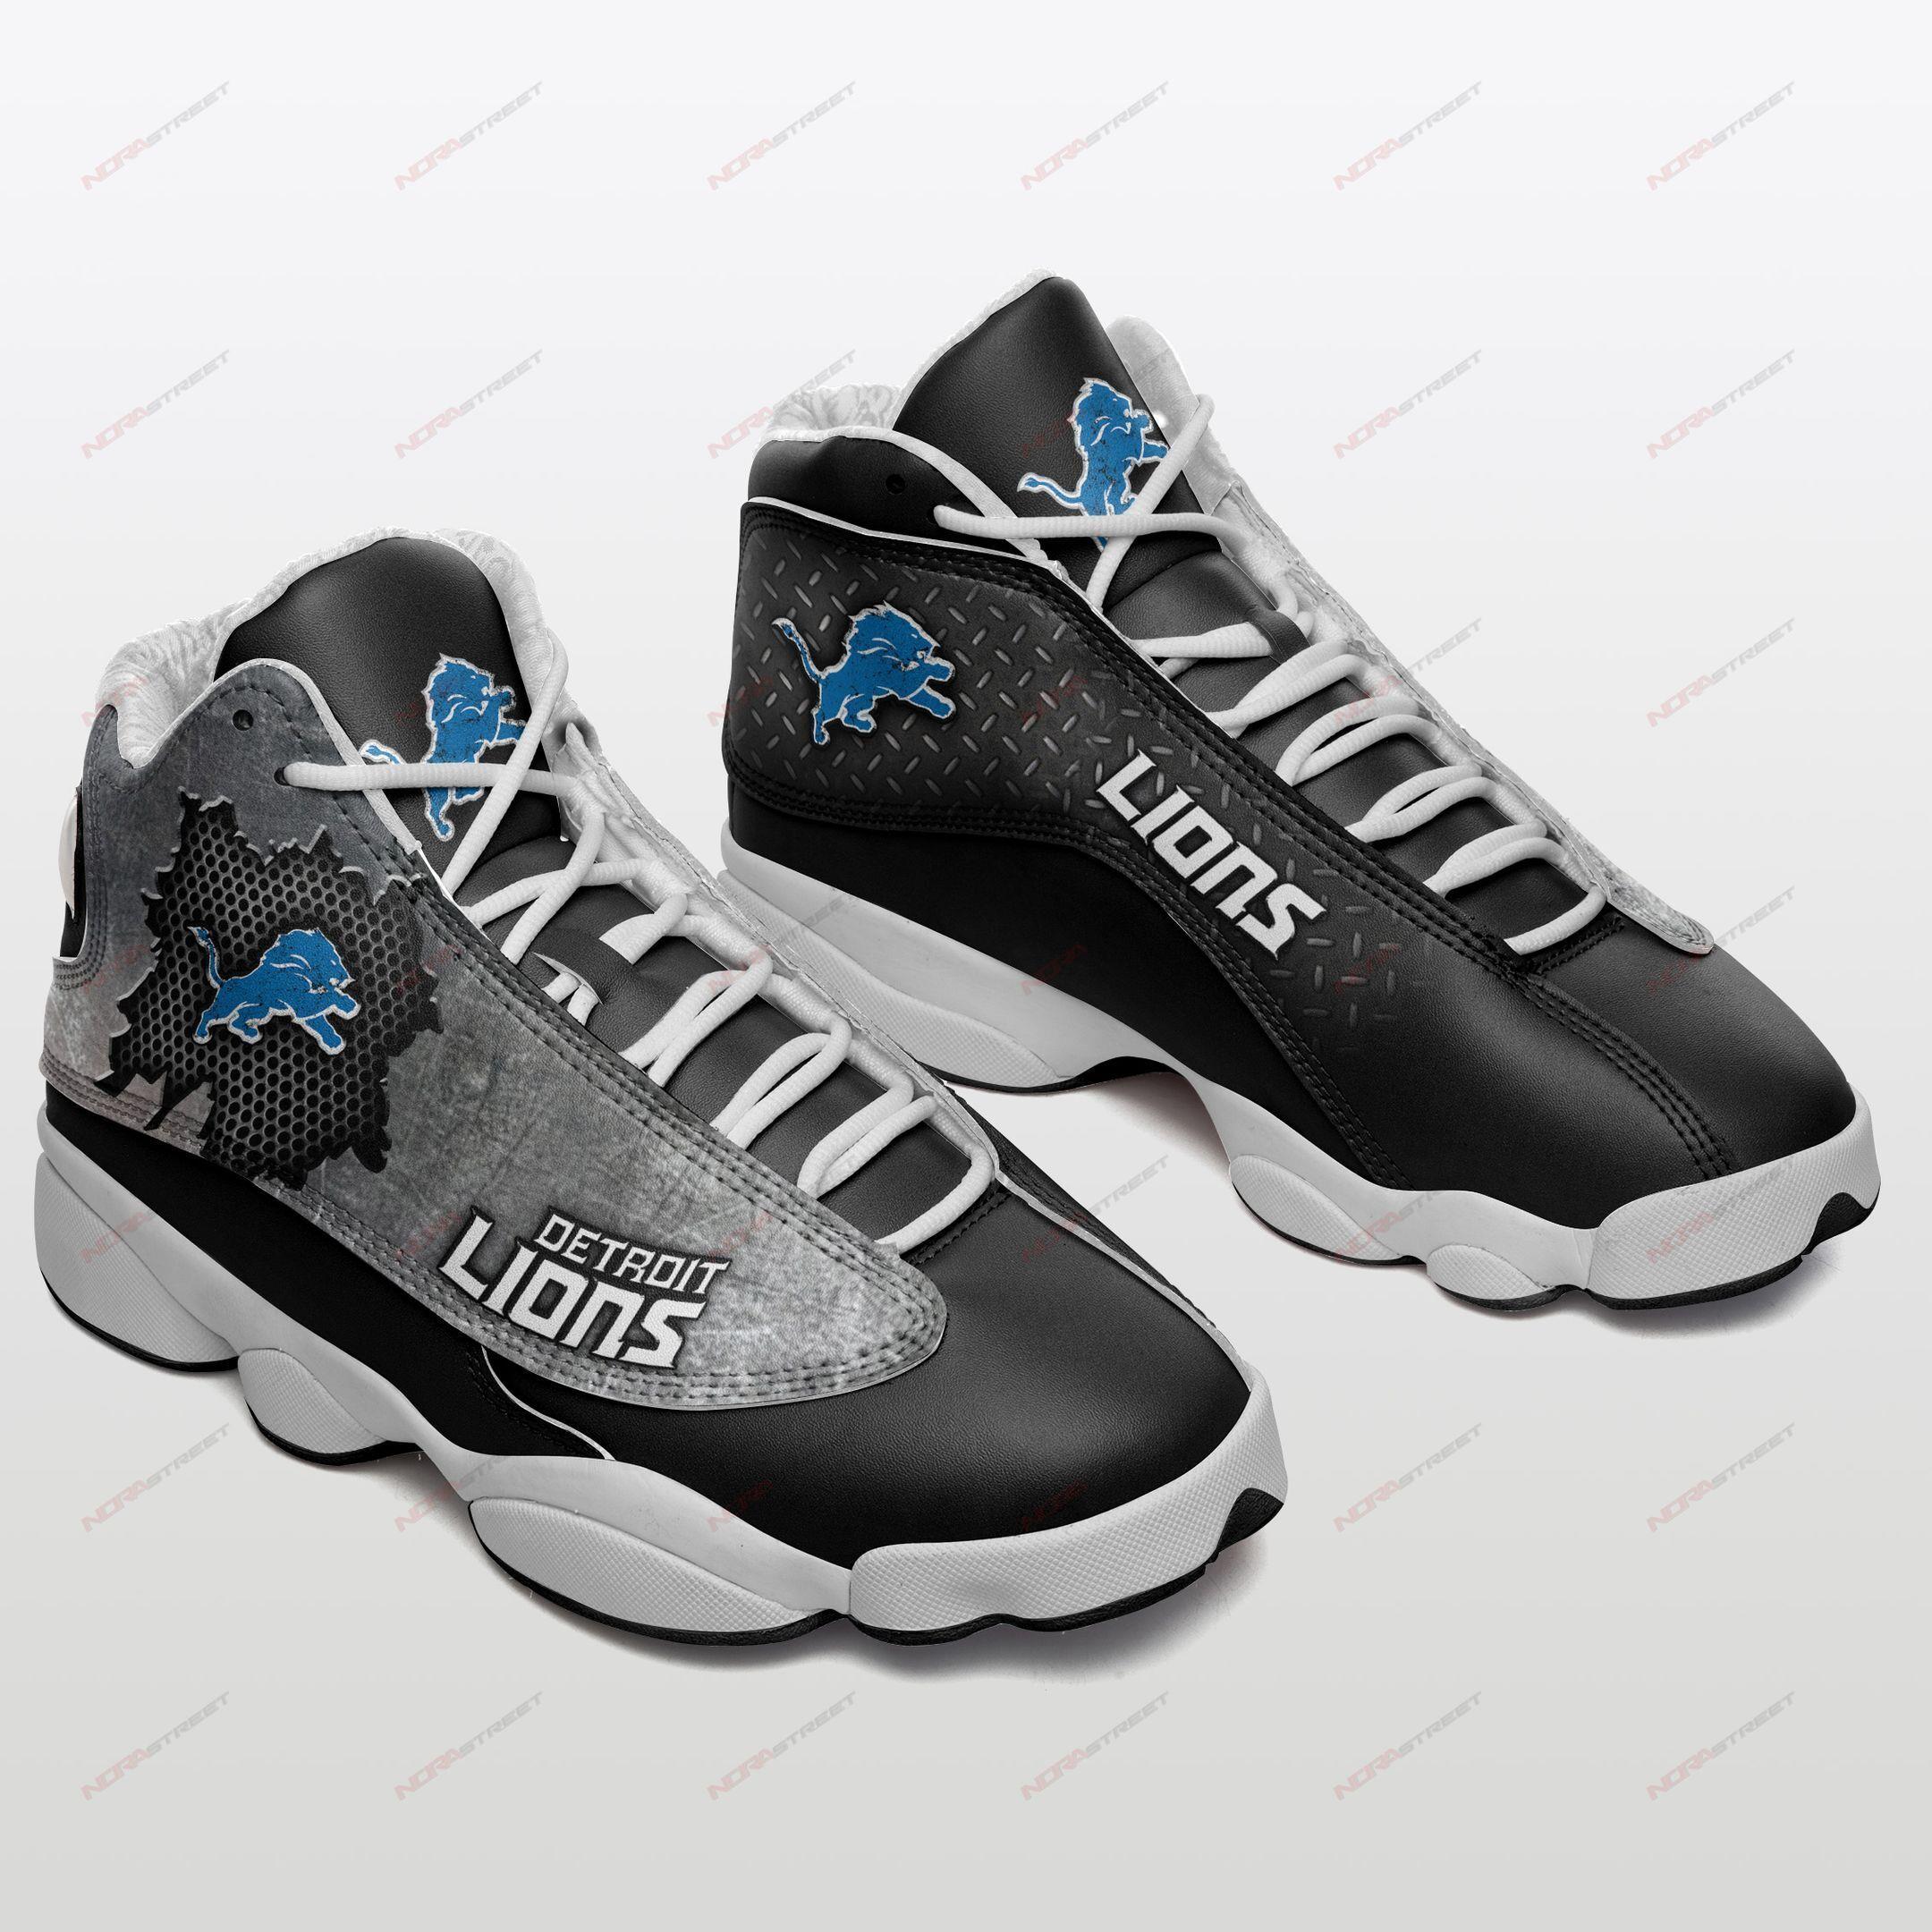 Detroit Lions Air Jordan 13 Sneakers Sport Shoes Full Size